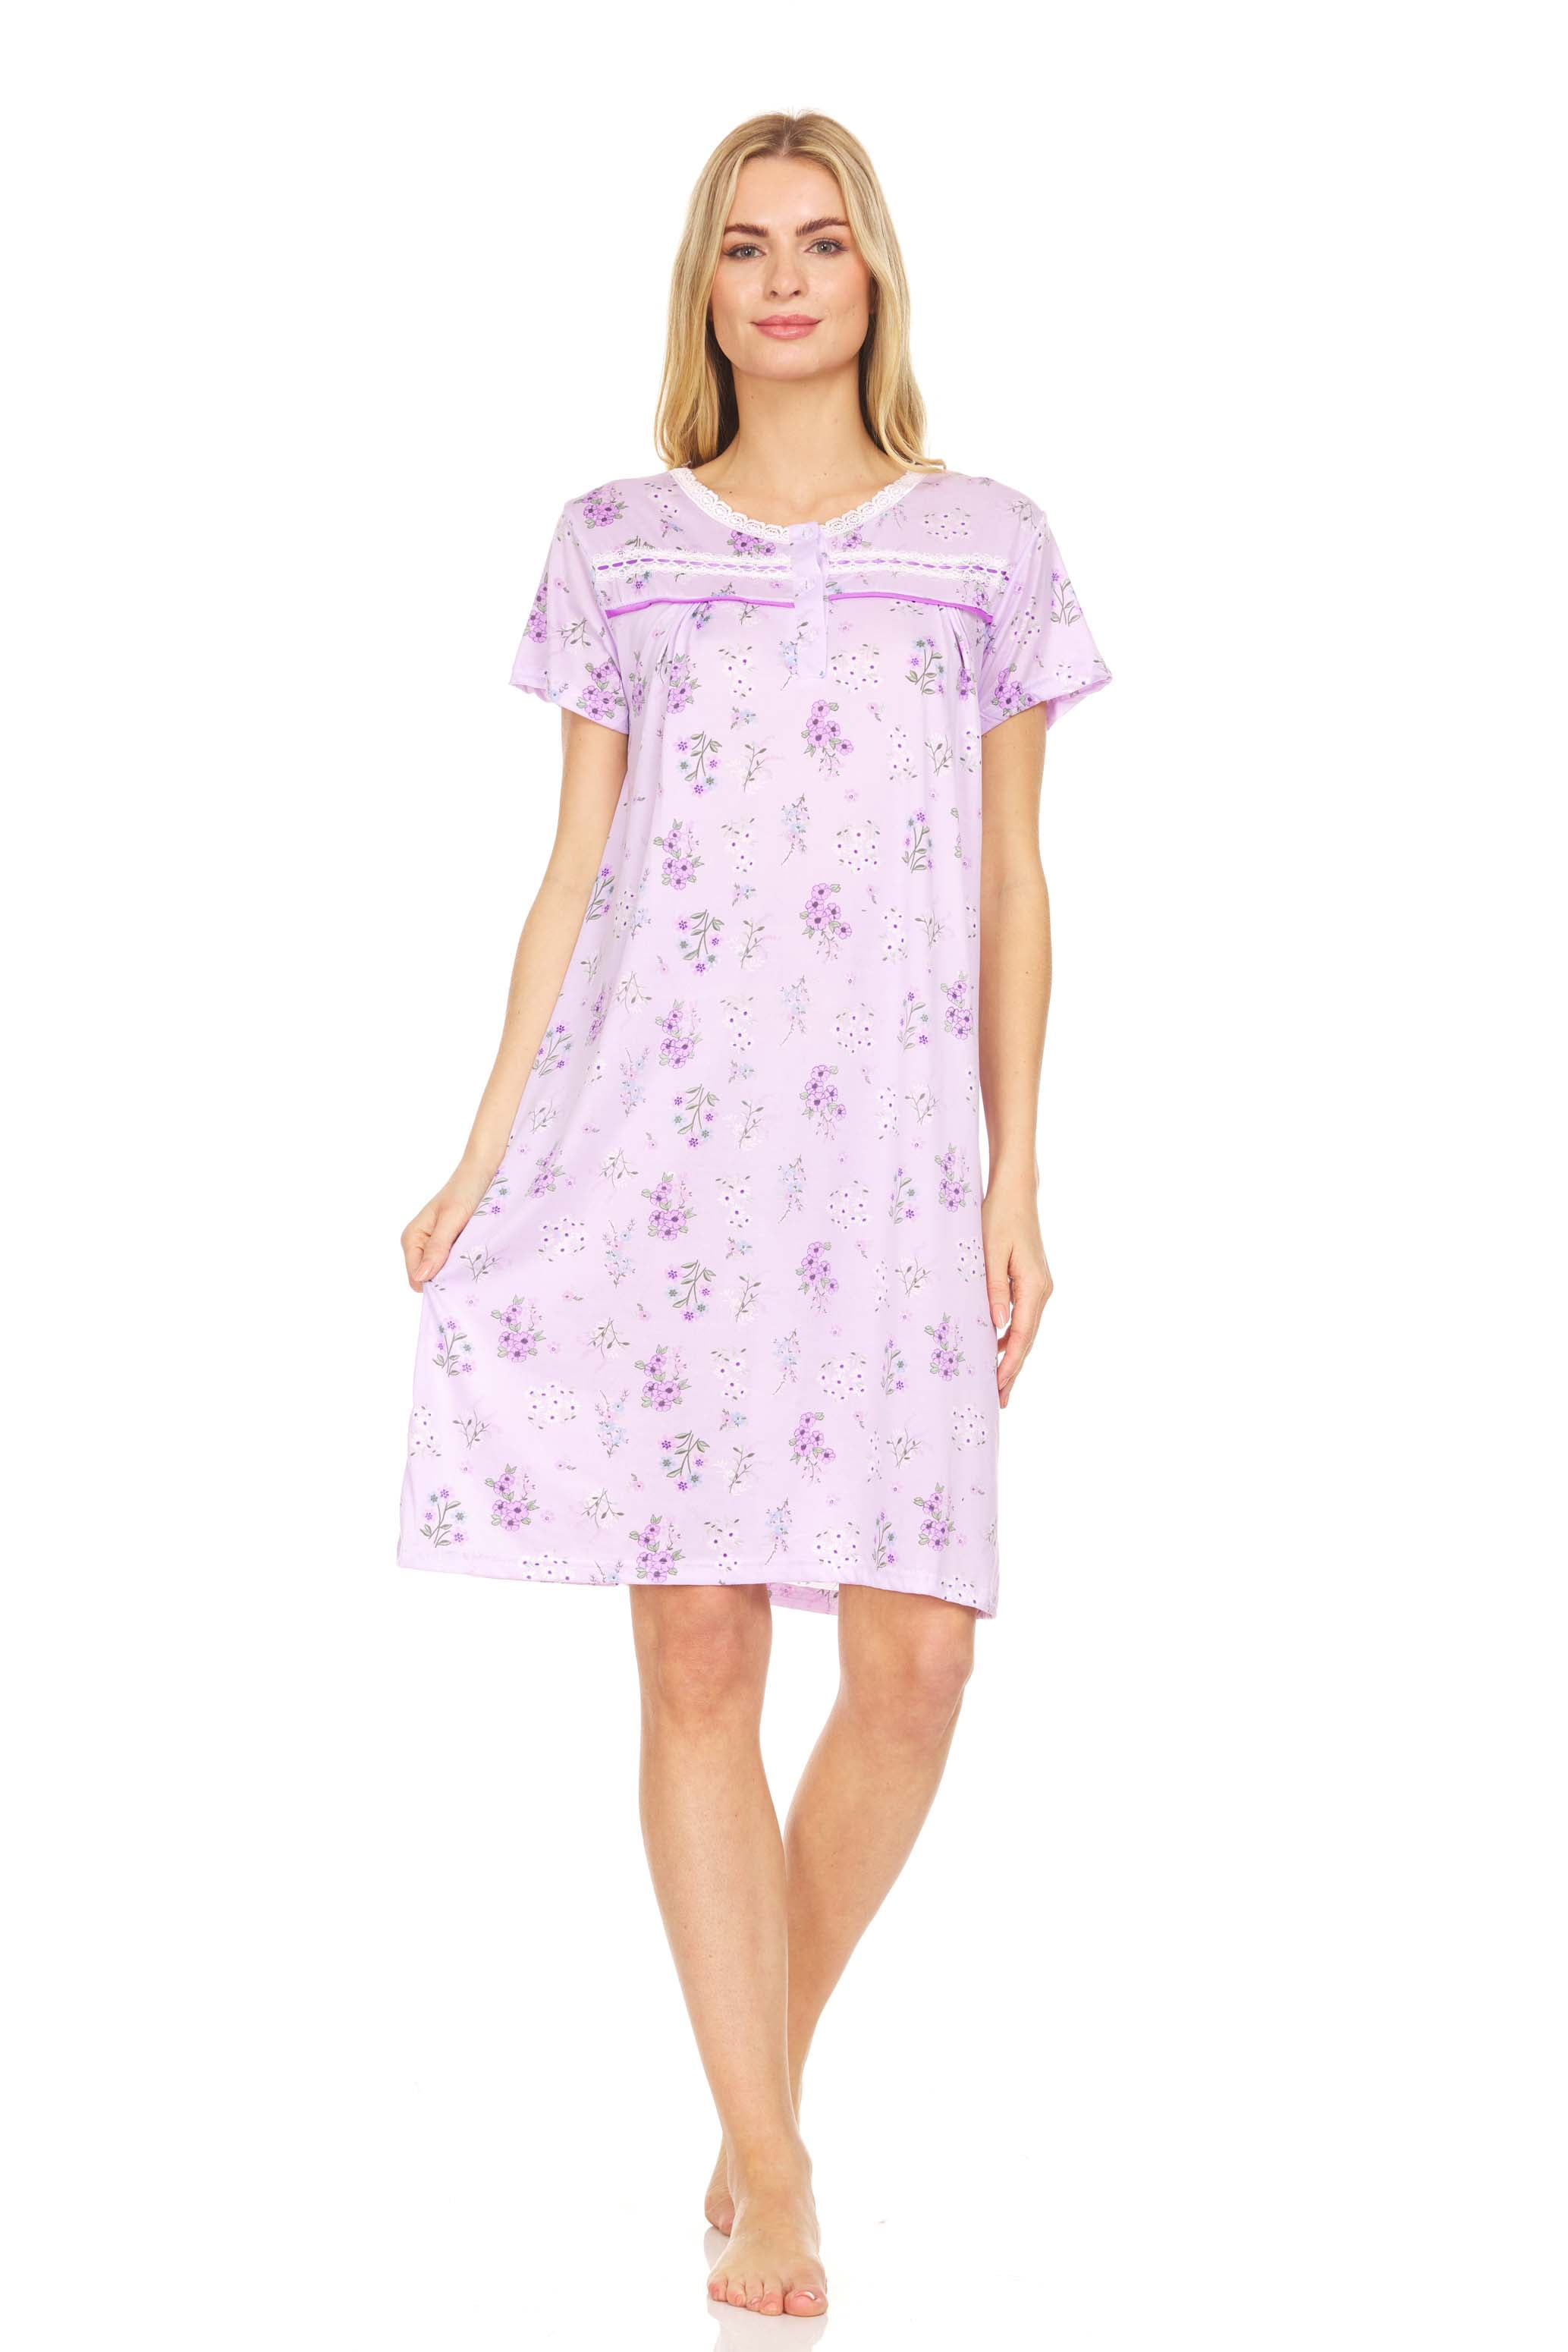 822 Womens Nightgown Sleepwear Pajamas - Woman Short Sleeve Sleep Dress Nightshirt Purple L